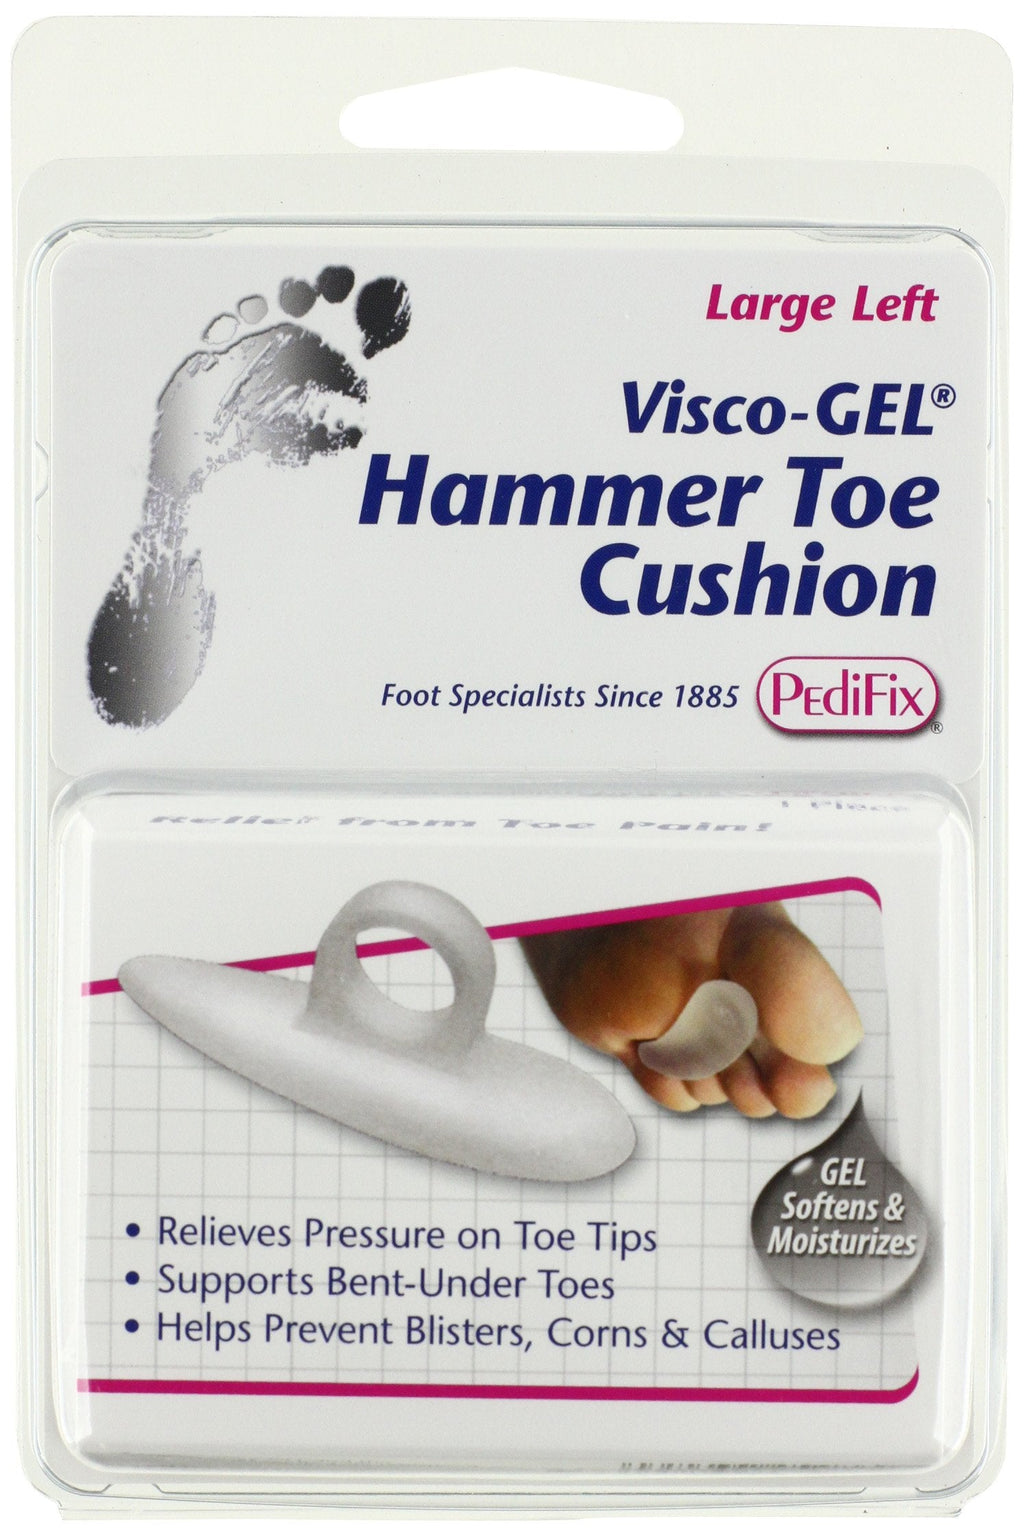 [Australia] - PediFix Visco-gel Hammer Toe Cushion, Large Left 1 Count (Pack of 1) 